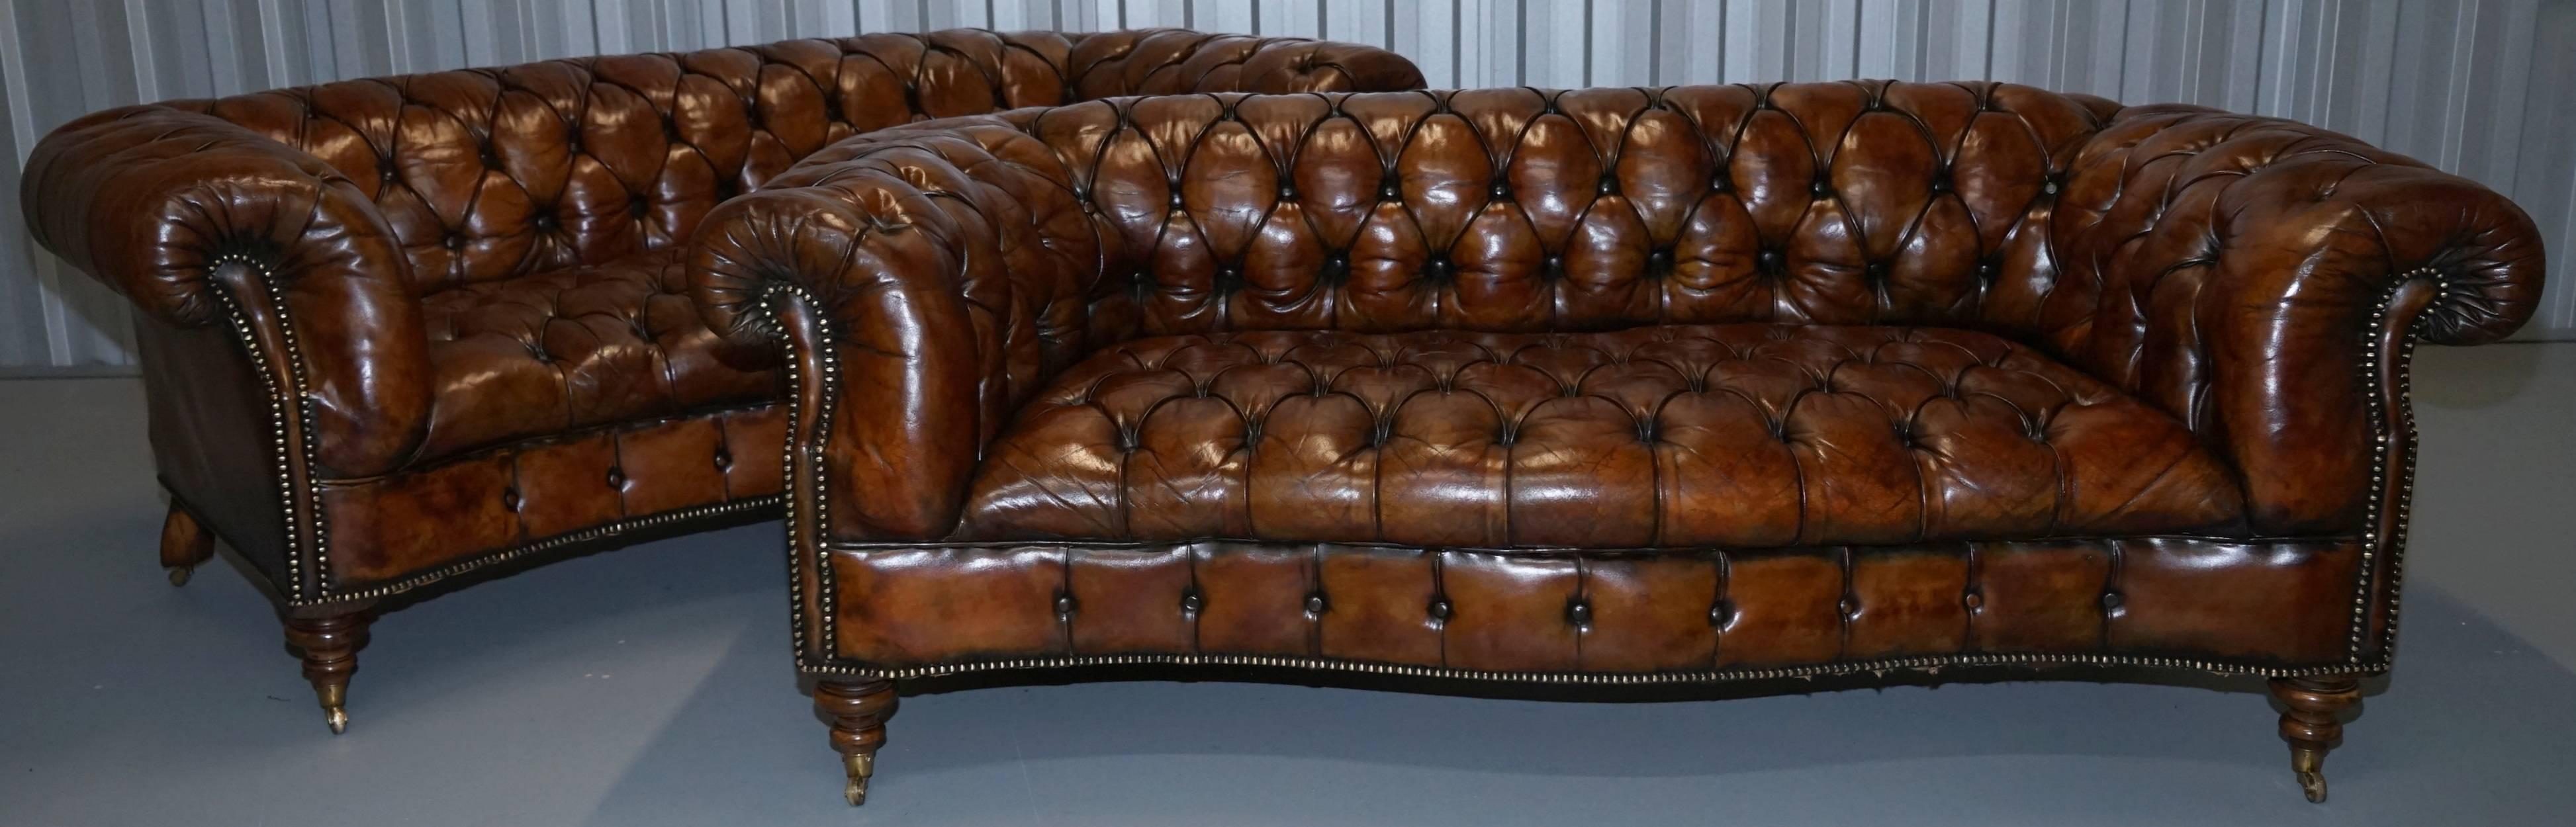 victorian style sofas